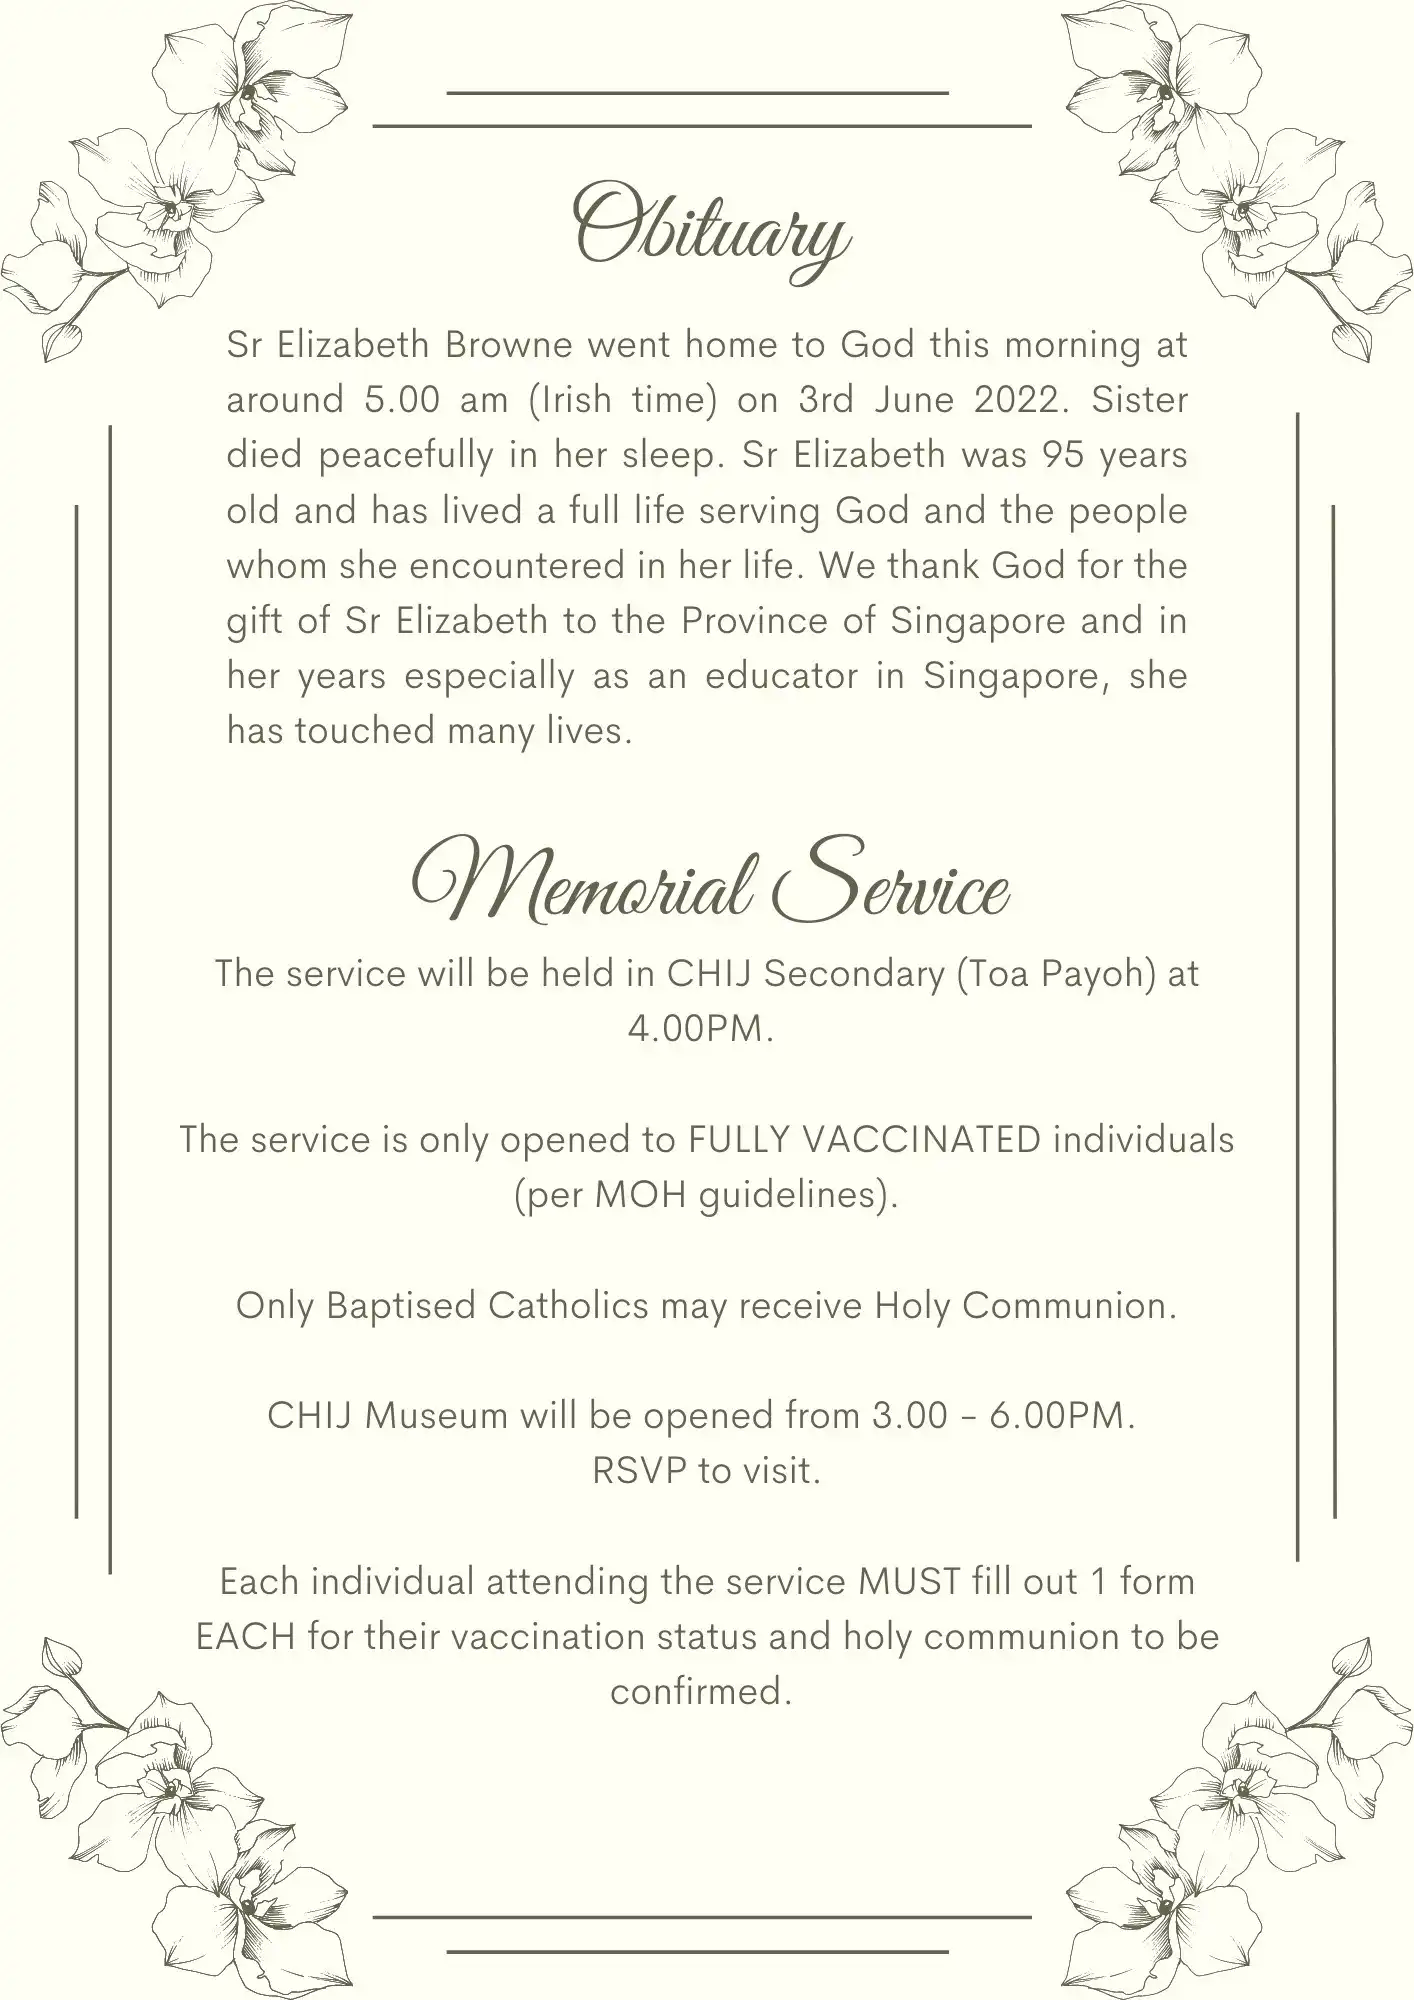 Memorial service for Sr Elizabeth Browne 2